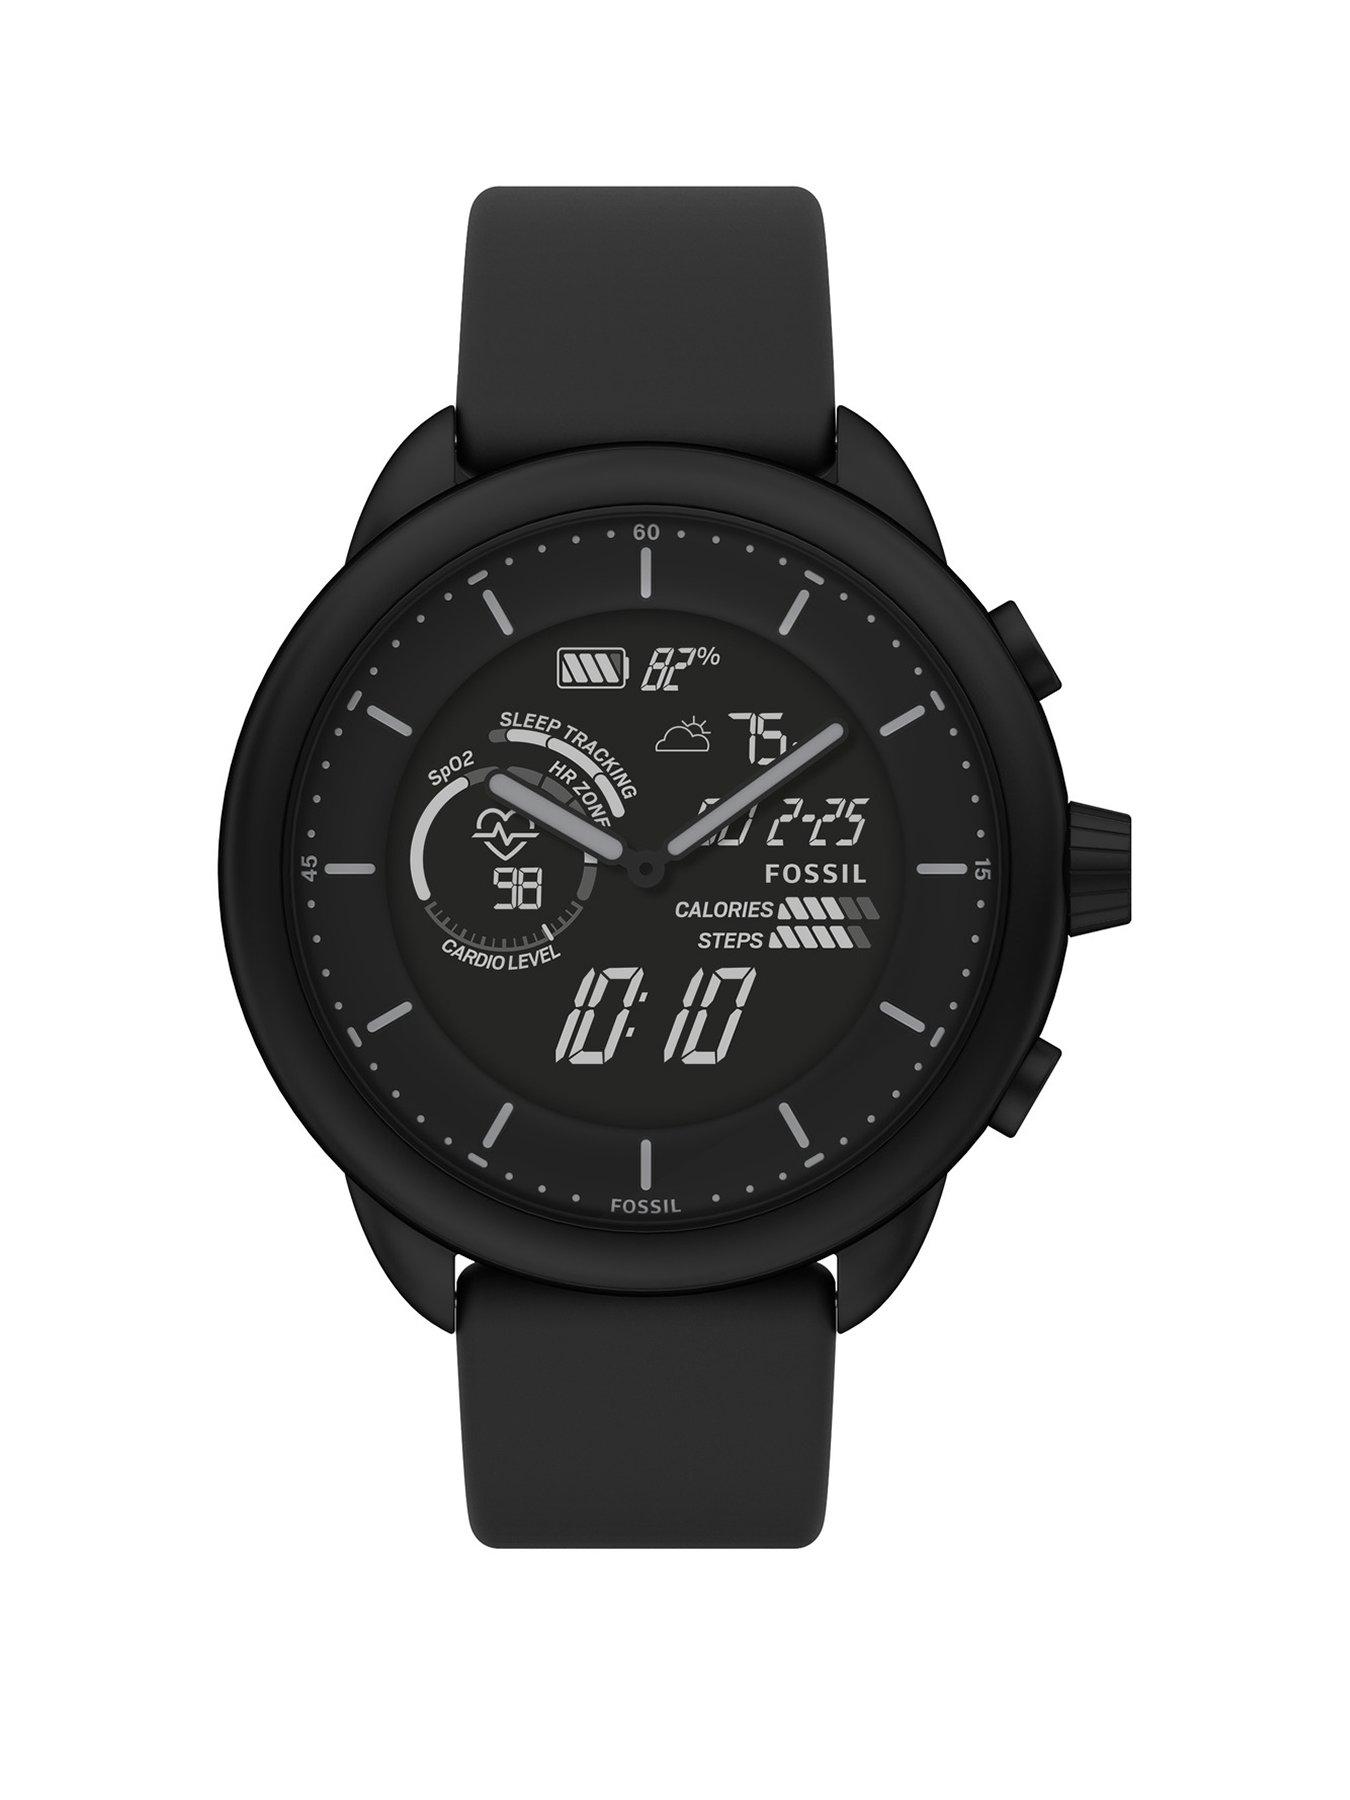 Fitness Smart Watches Ireland Fitbit Garmin, Very | | Apple